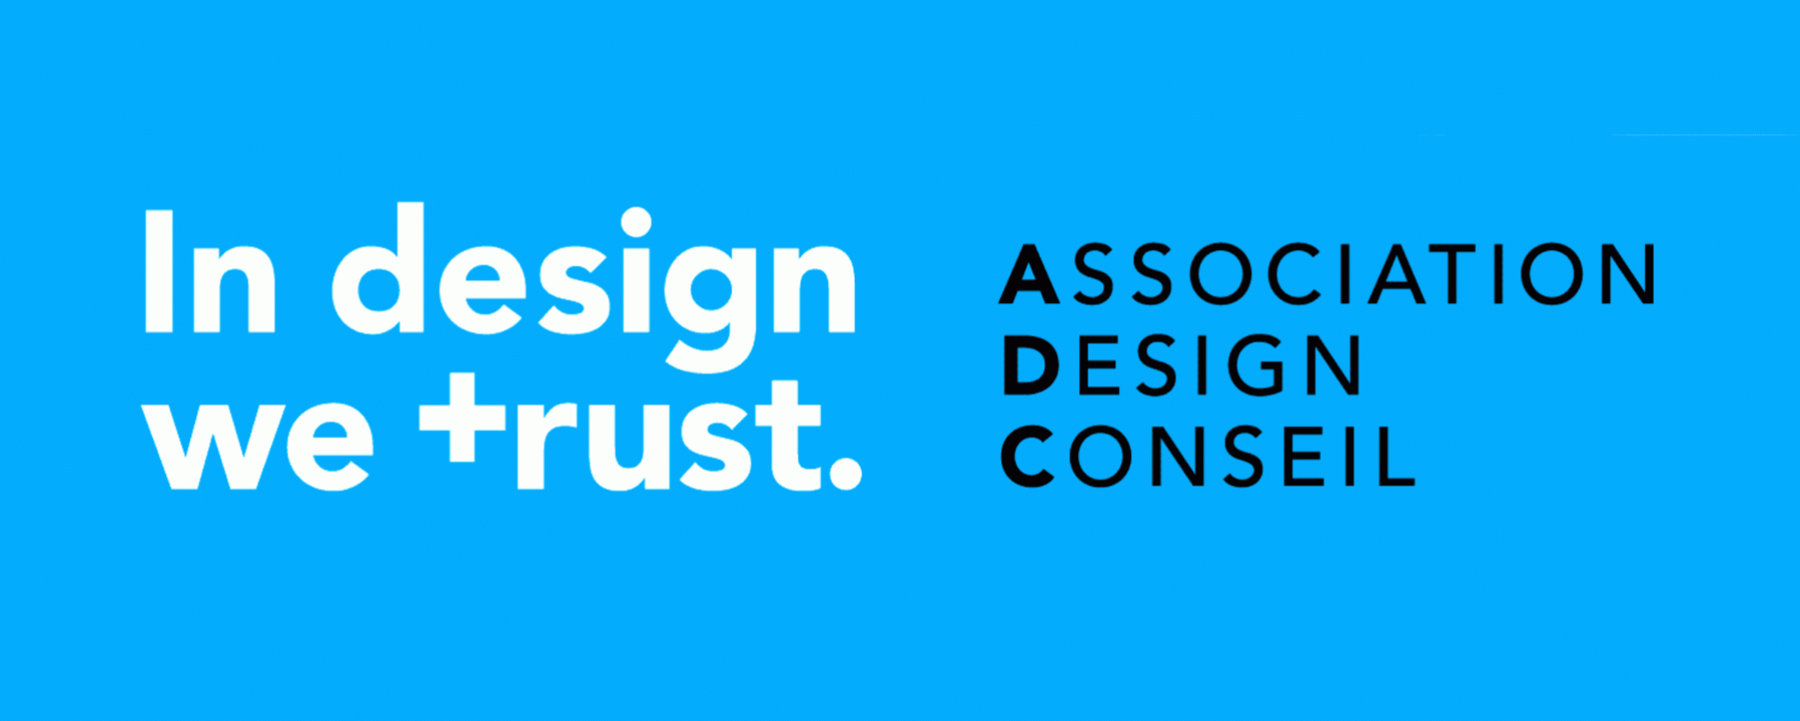 In design we trust le 12 octobre 2021